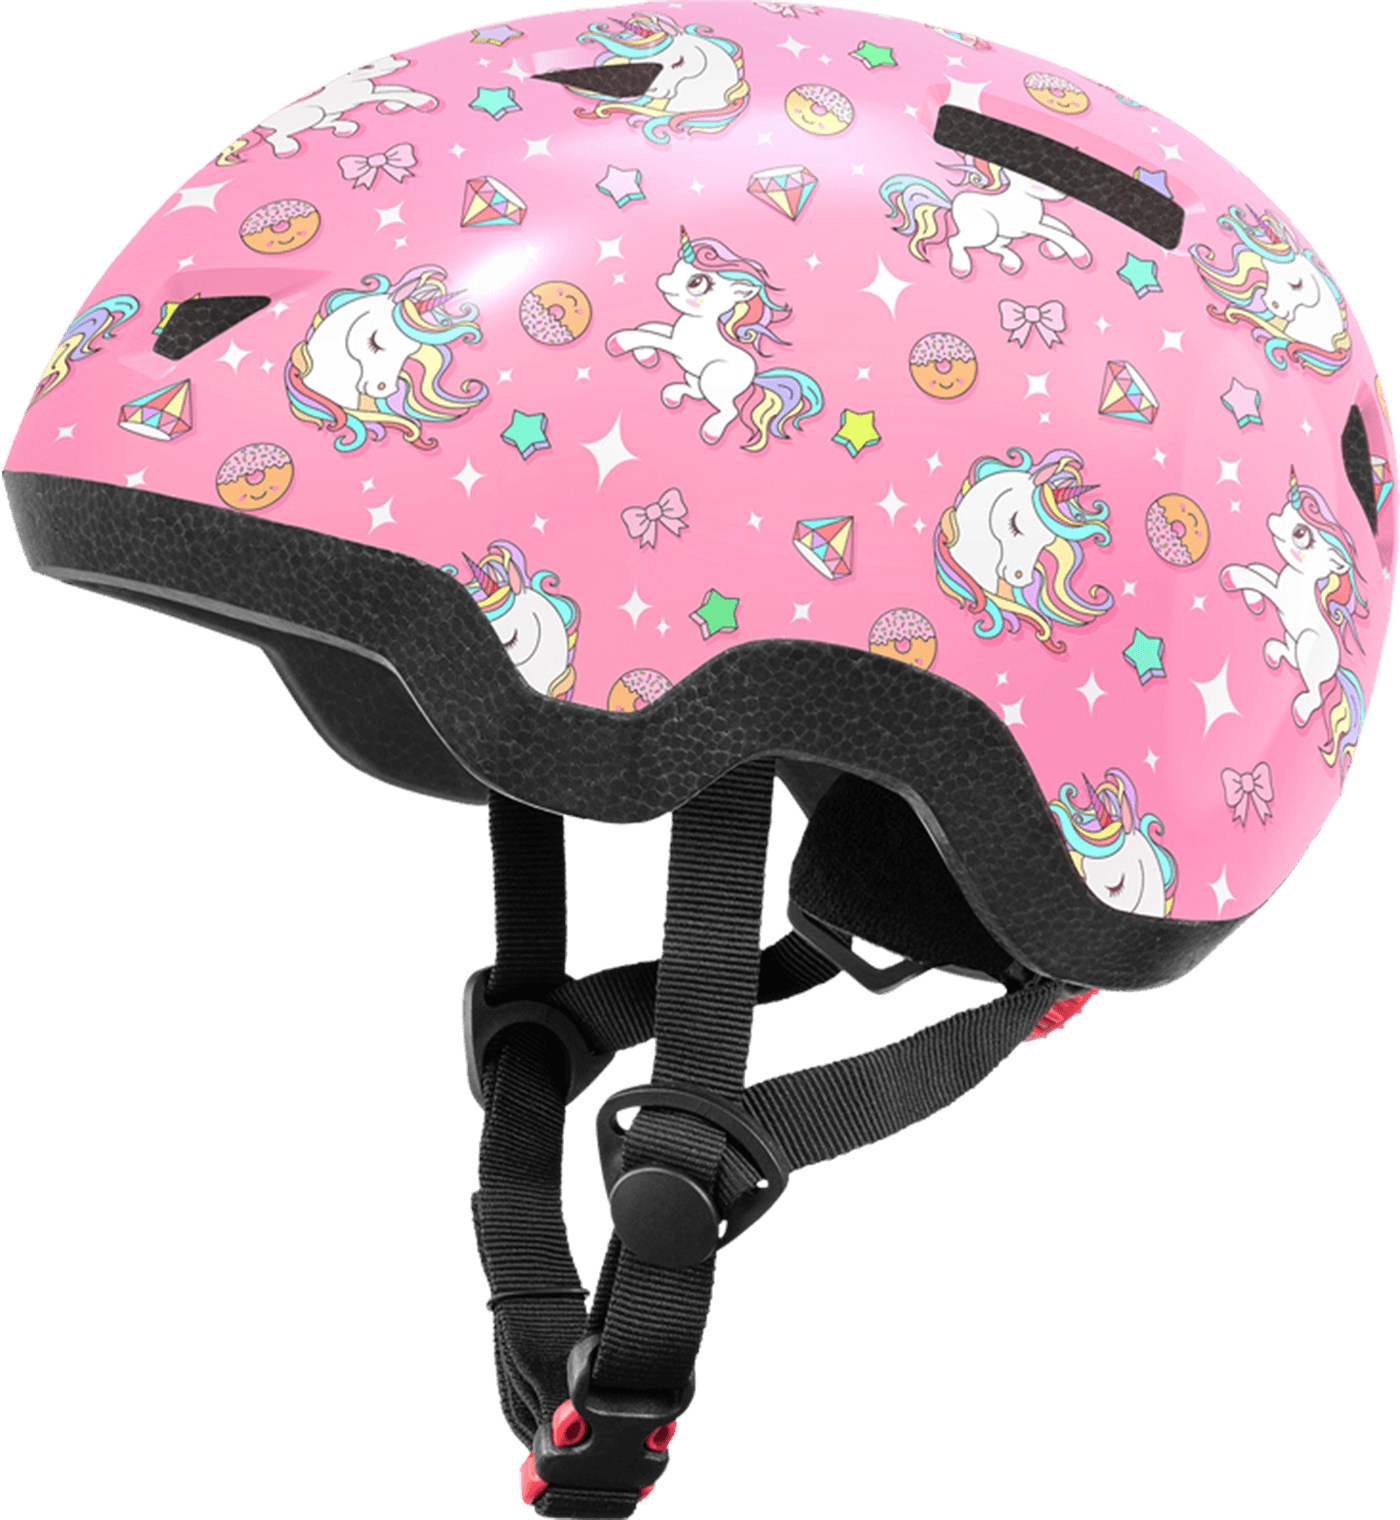 Toddler Bike Helmet, Rainbow Unicorn, Pink